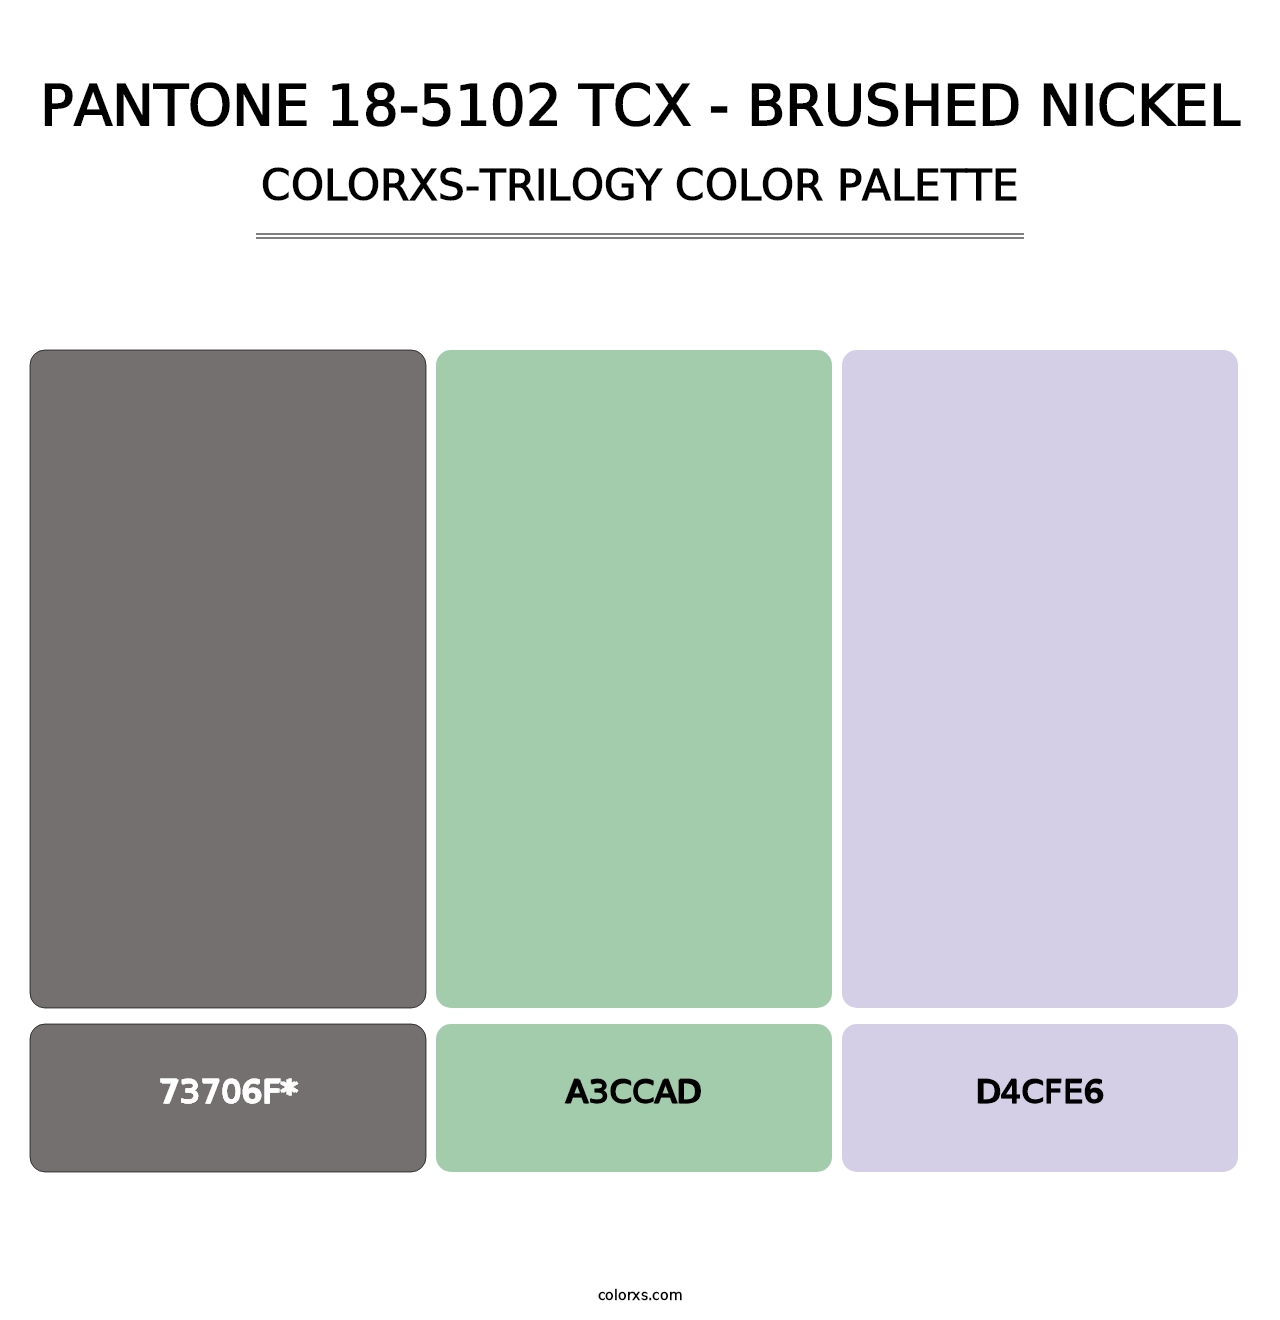 PANTONE 18-5102 TCX - Brushed Nickel - Colorxs Trilogy Palette